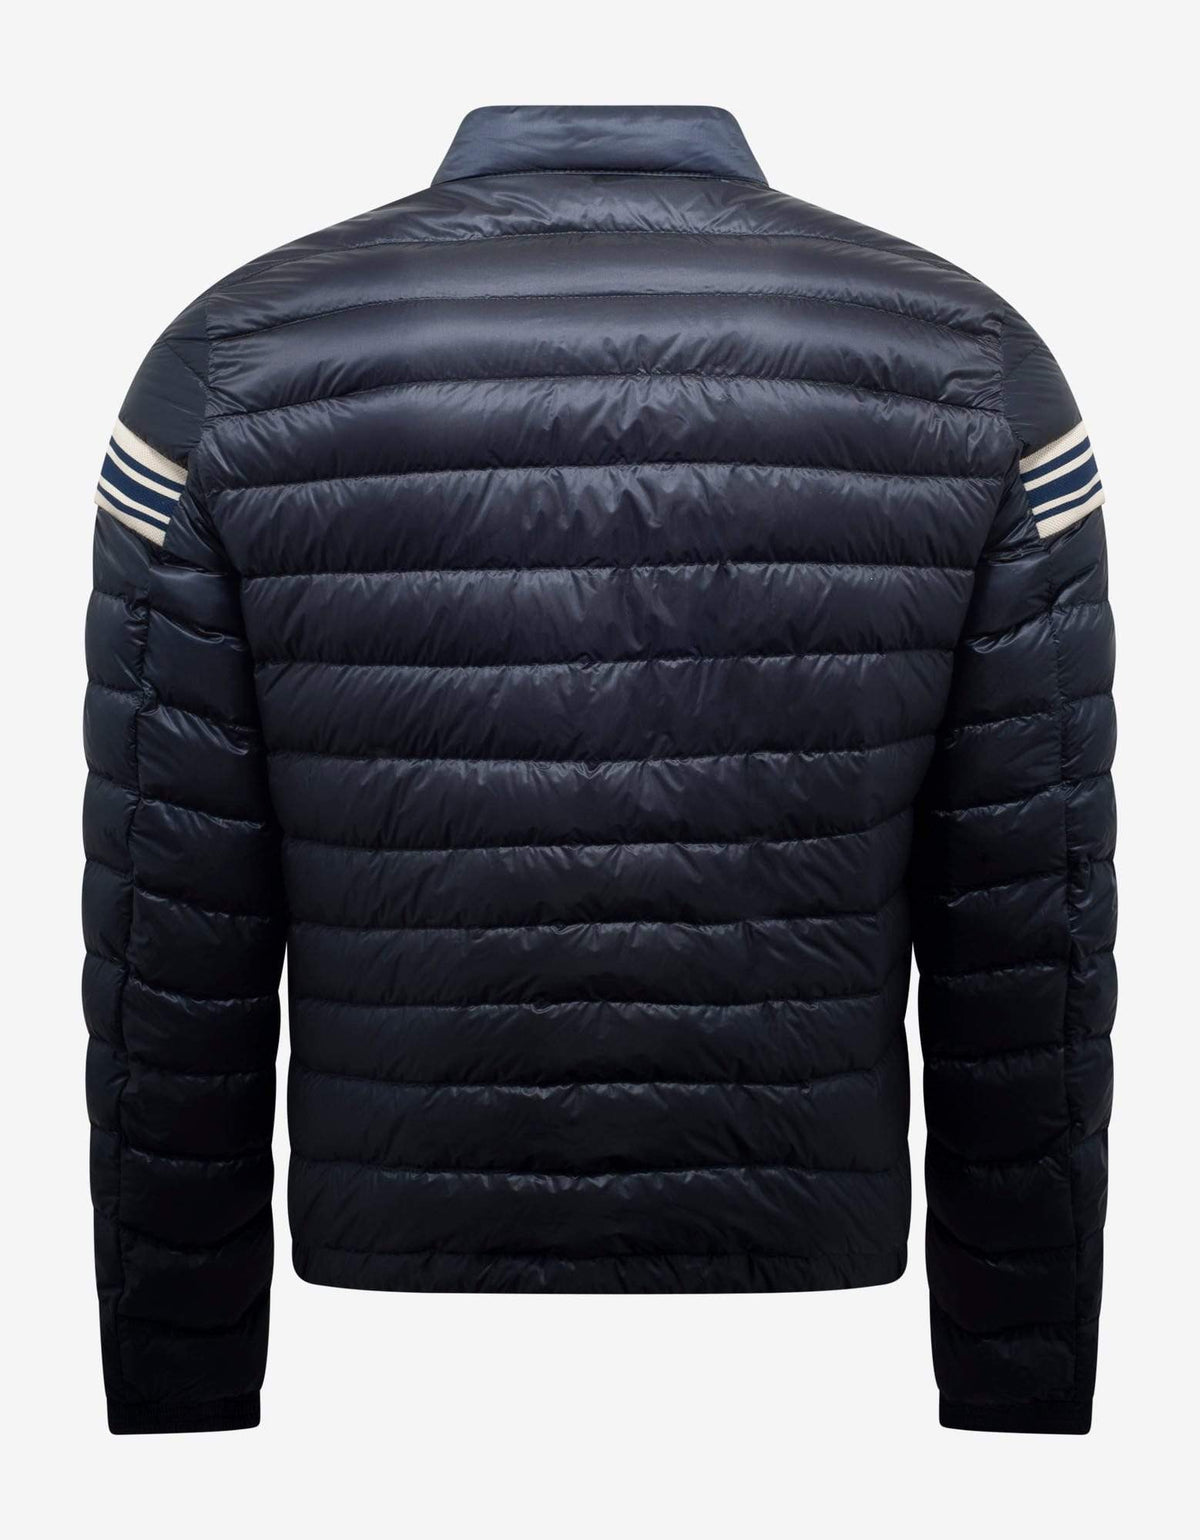 Moncler Renald Navy Blue Nylon Down Jacket